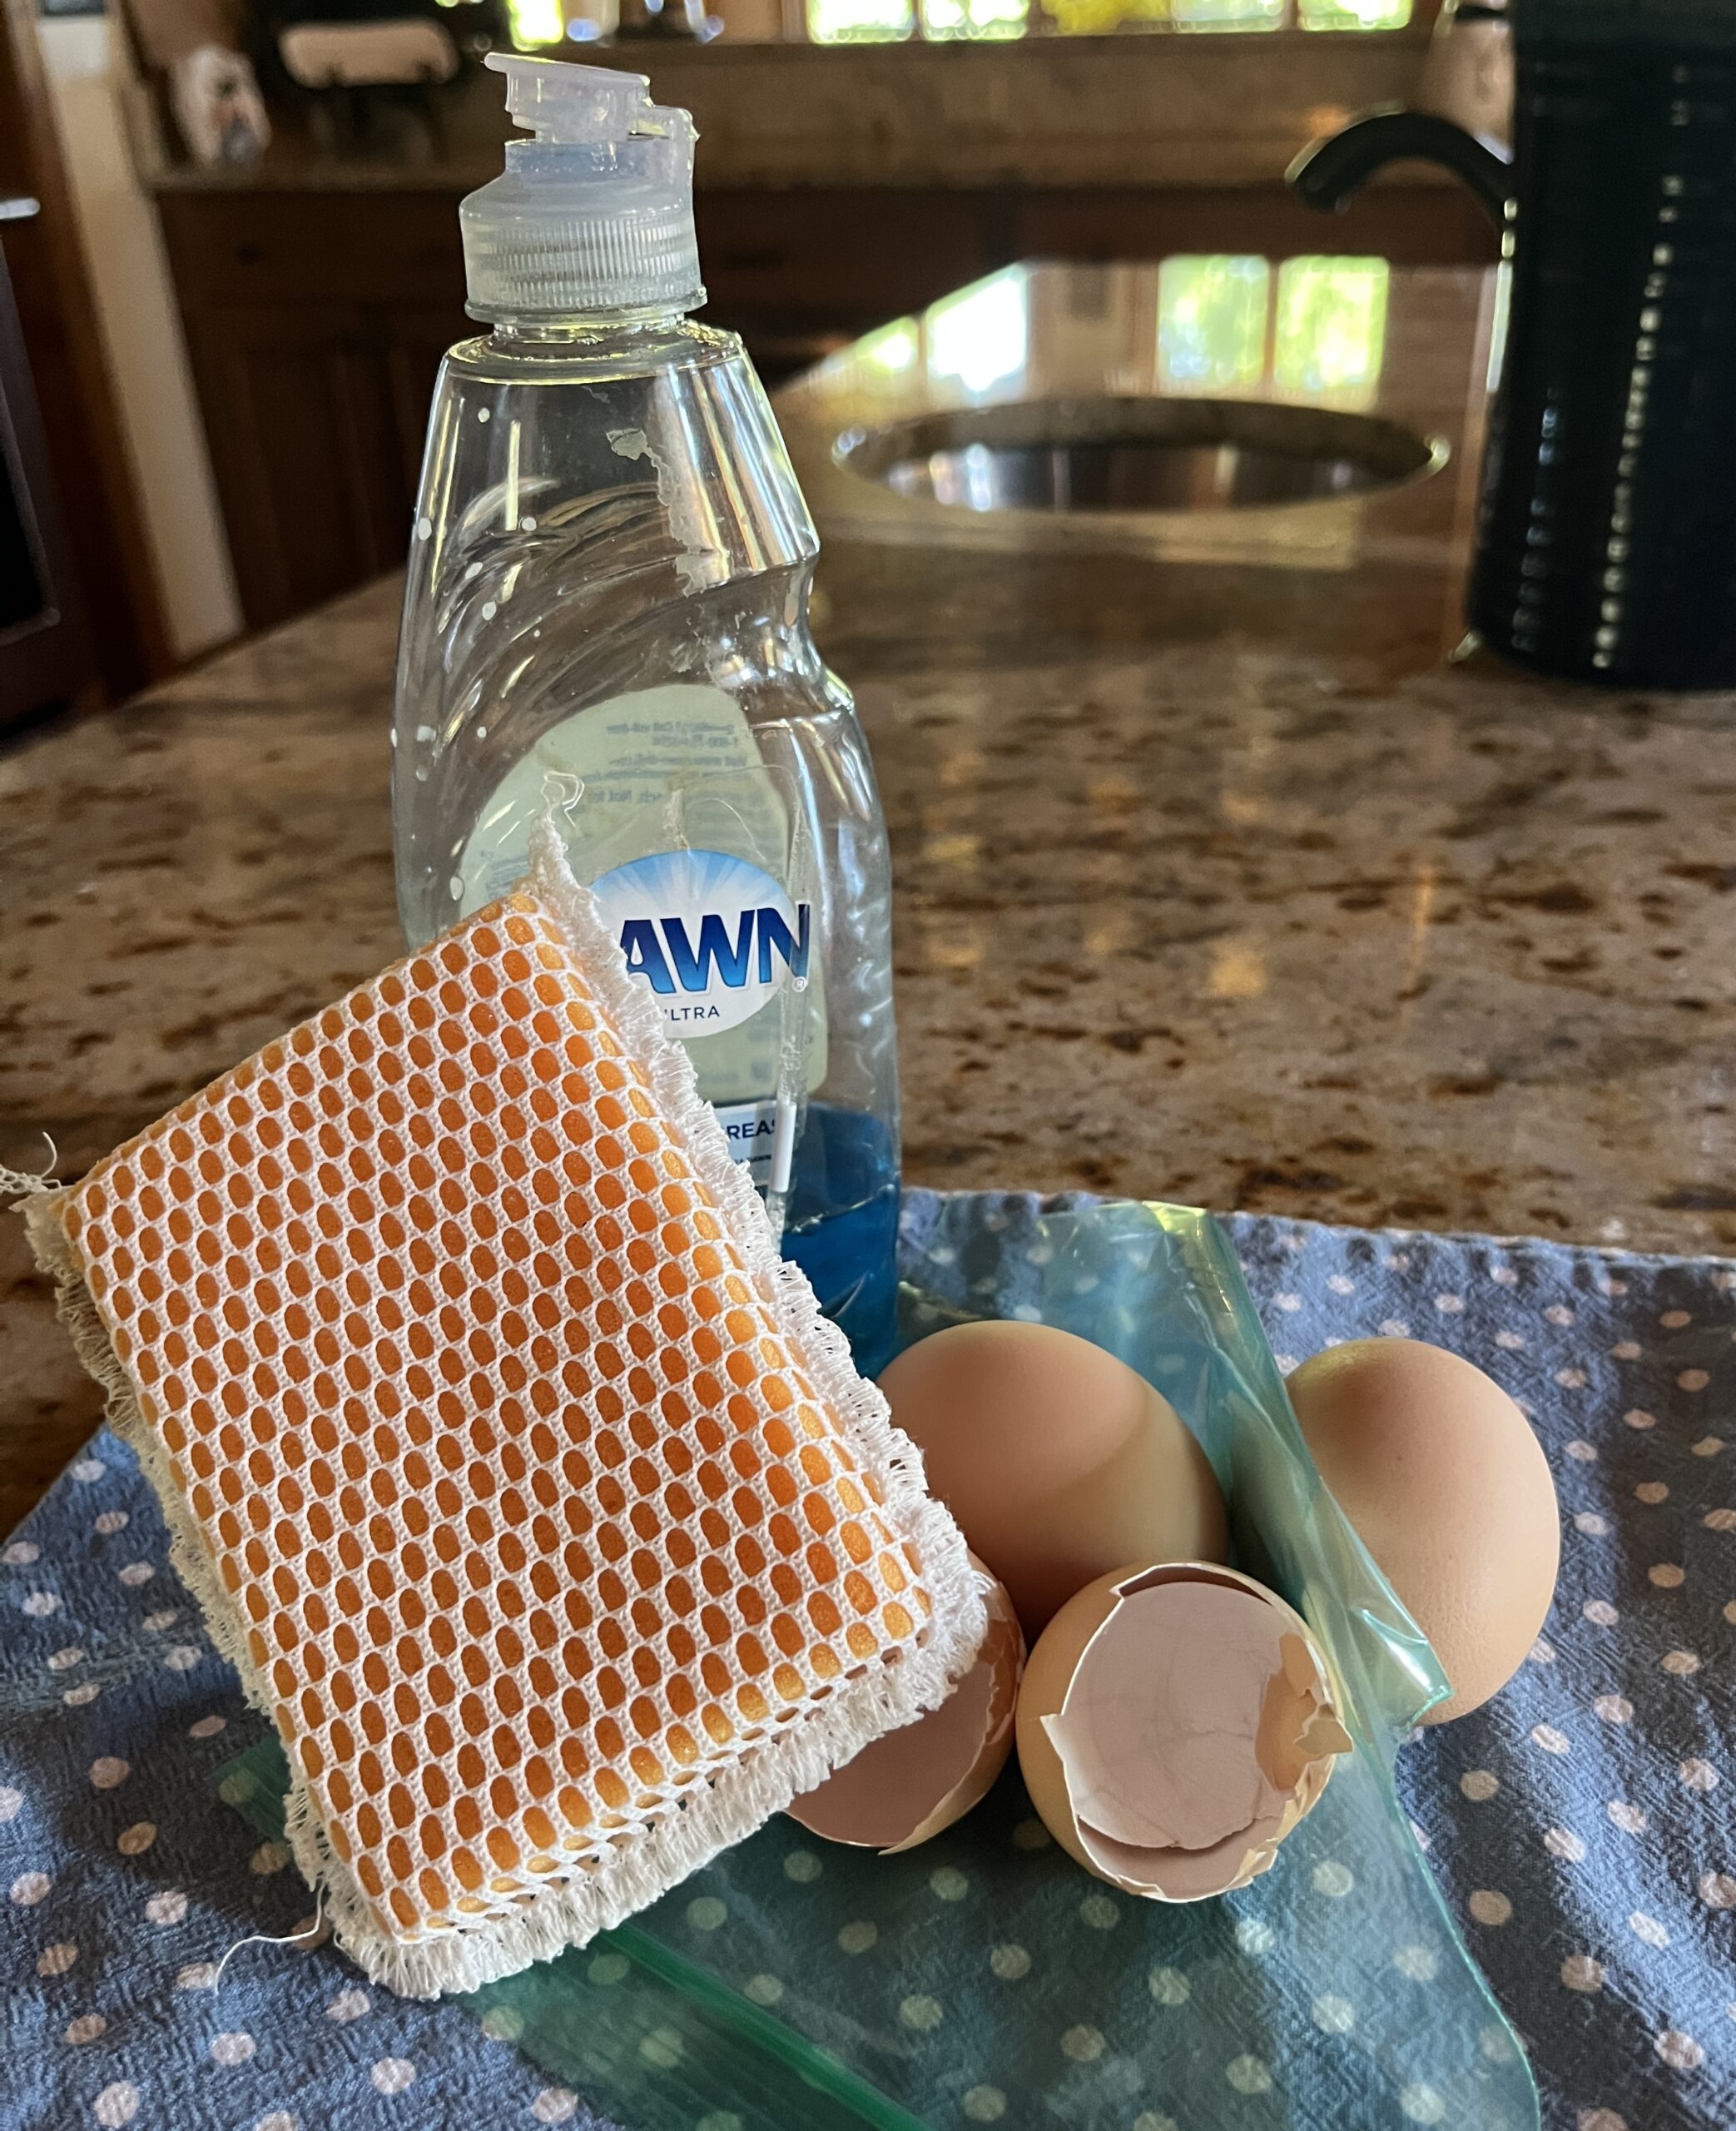 Eggs, dishwashing liquid and scrubber